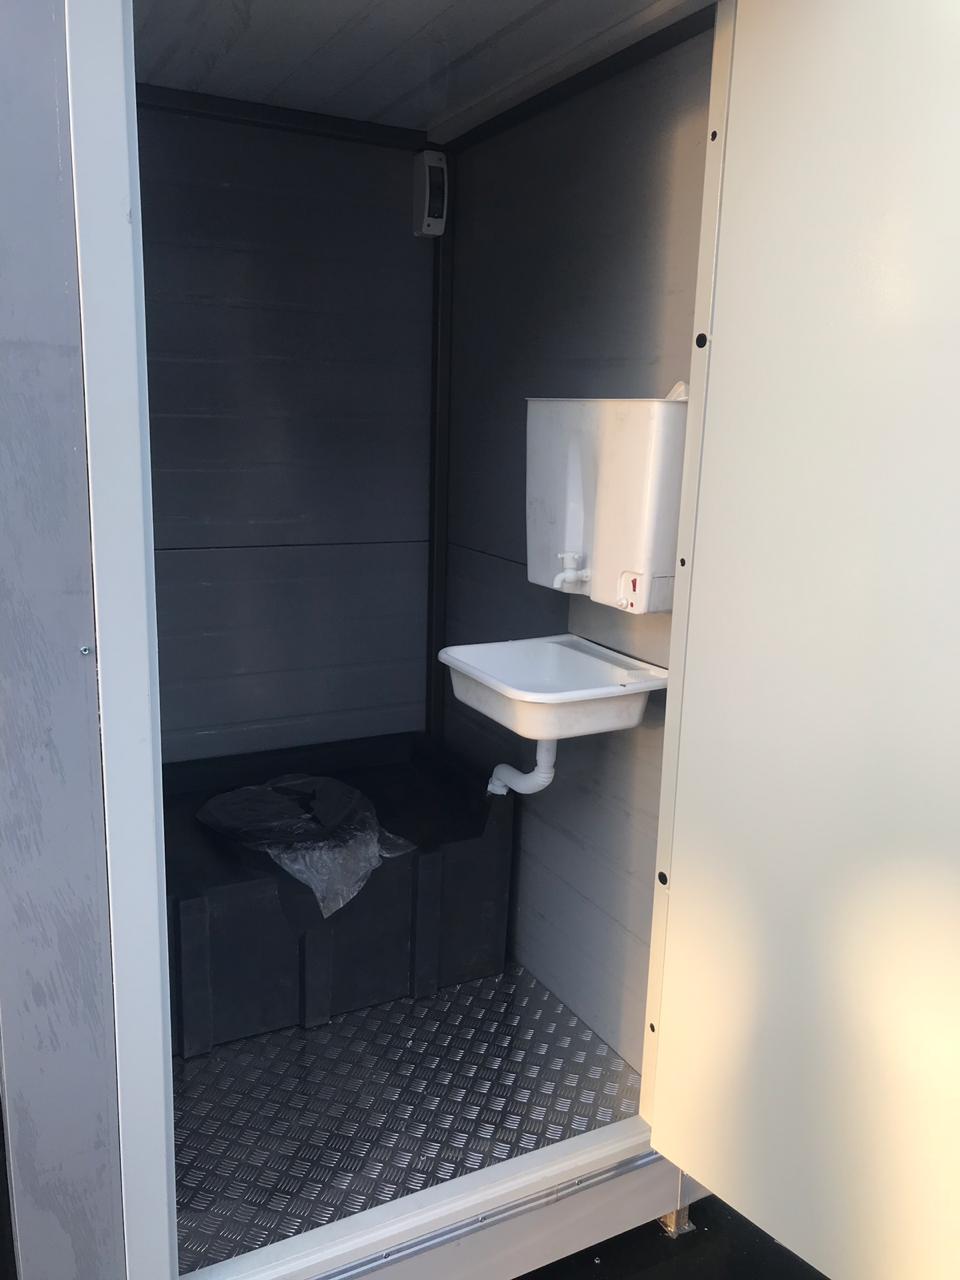 Теплая туалетная кабина ЭКОС-2 (фото 1) в Казани